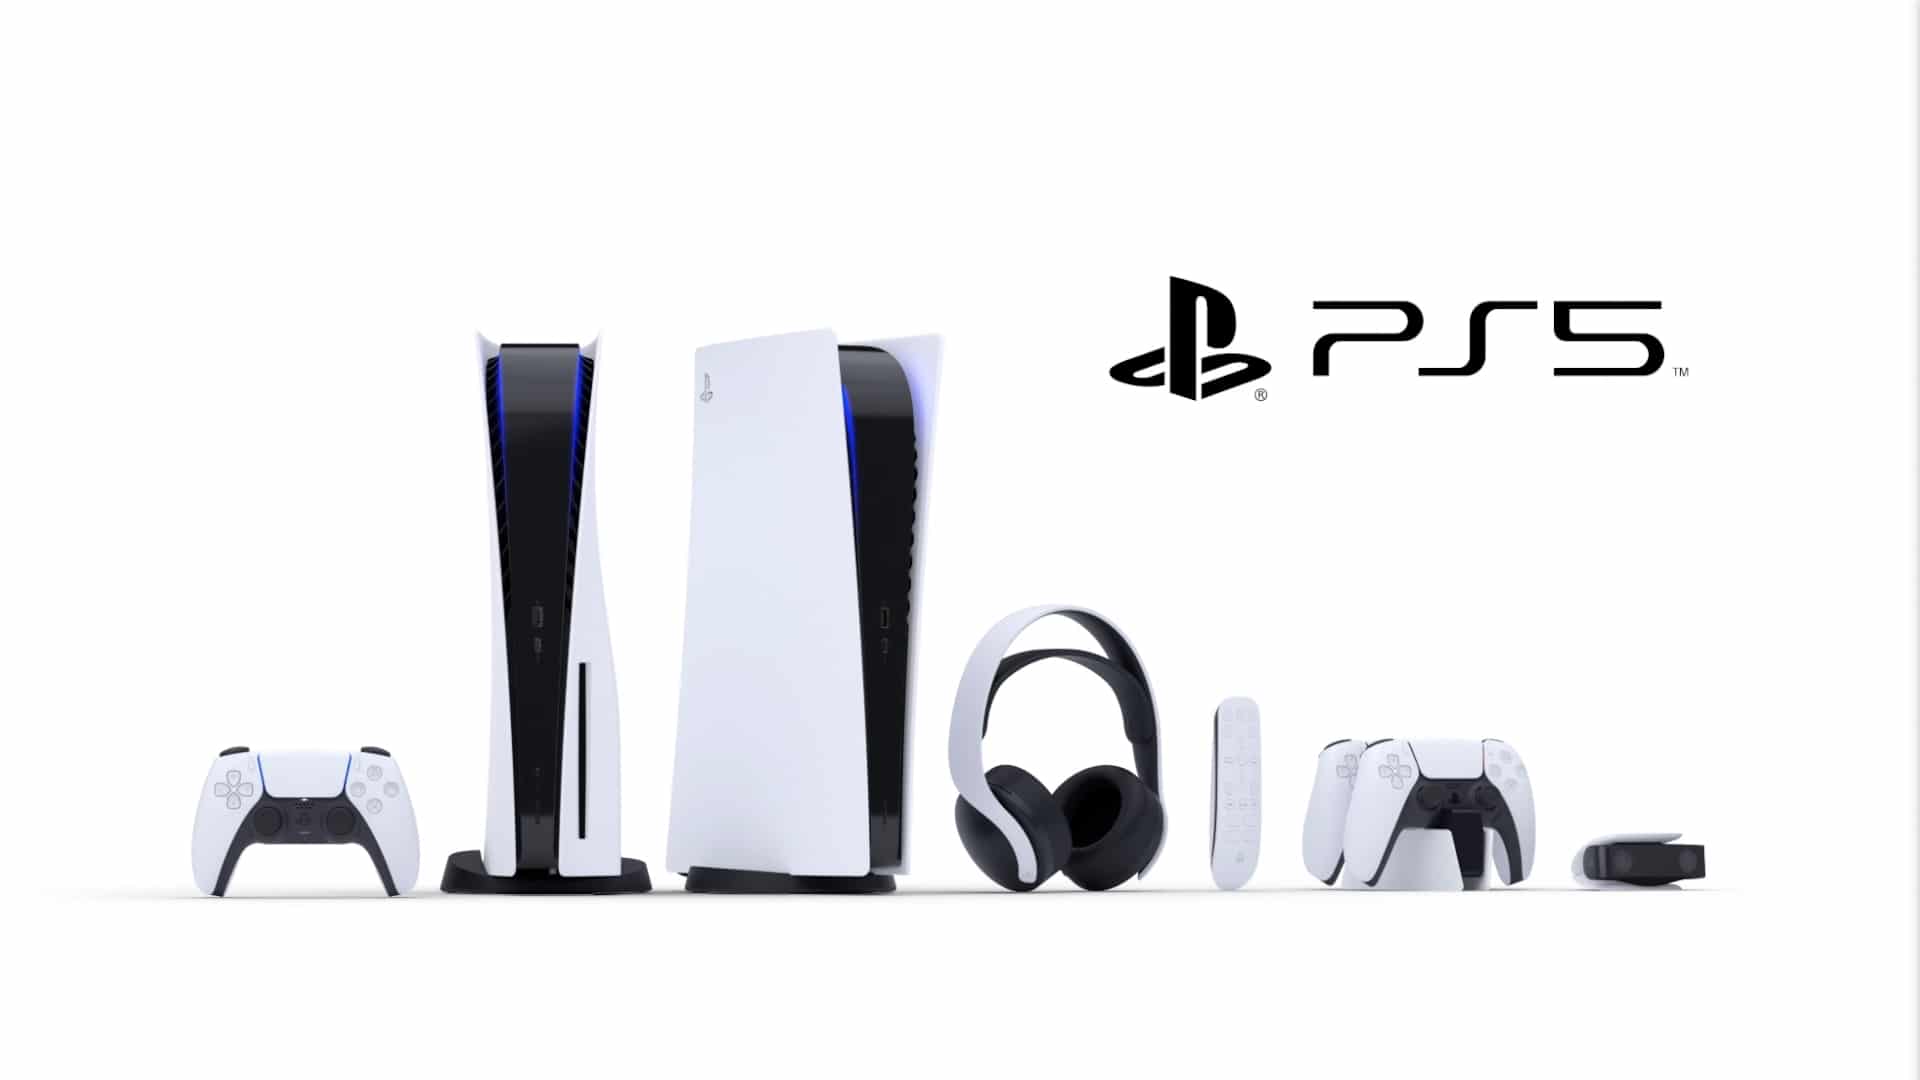 PlayStation 5 digital